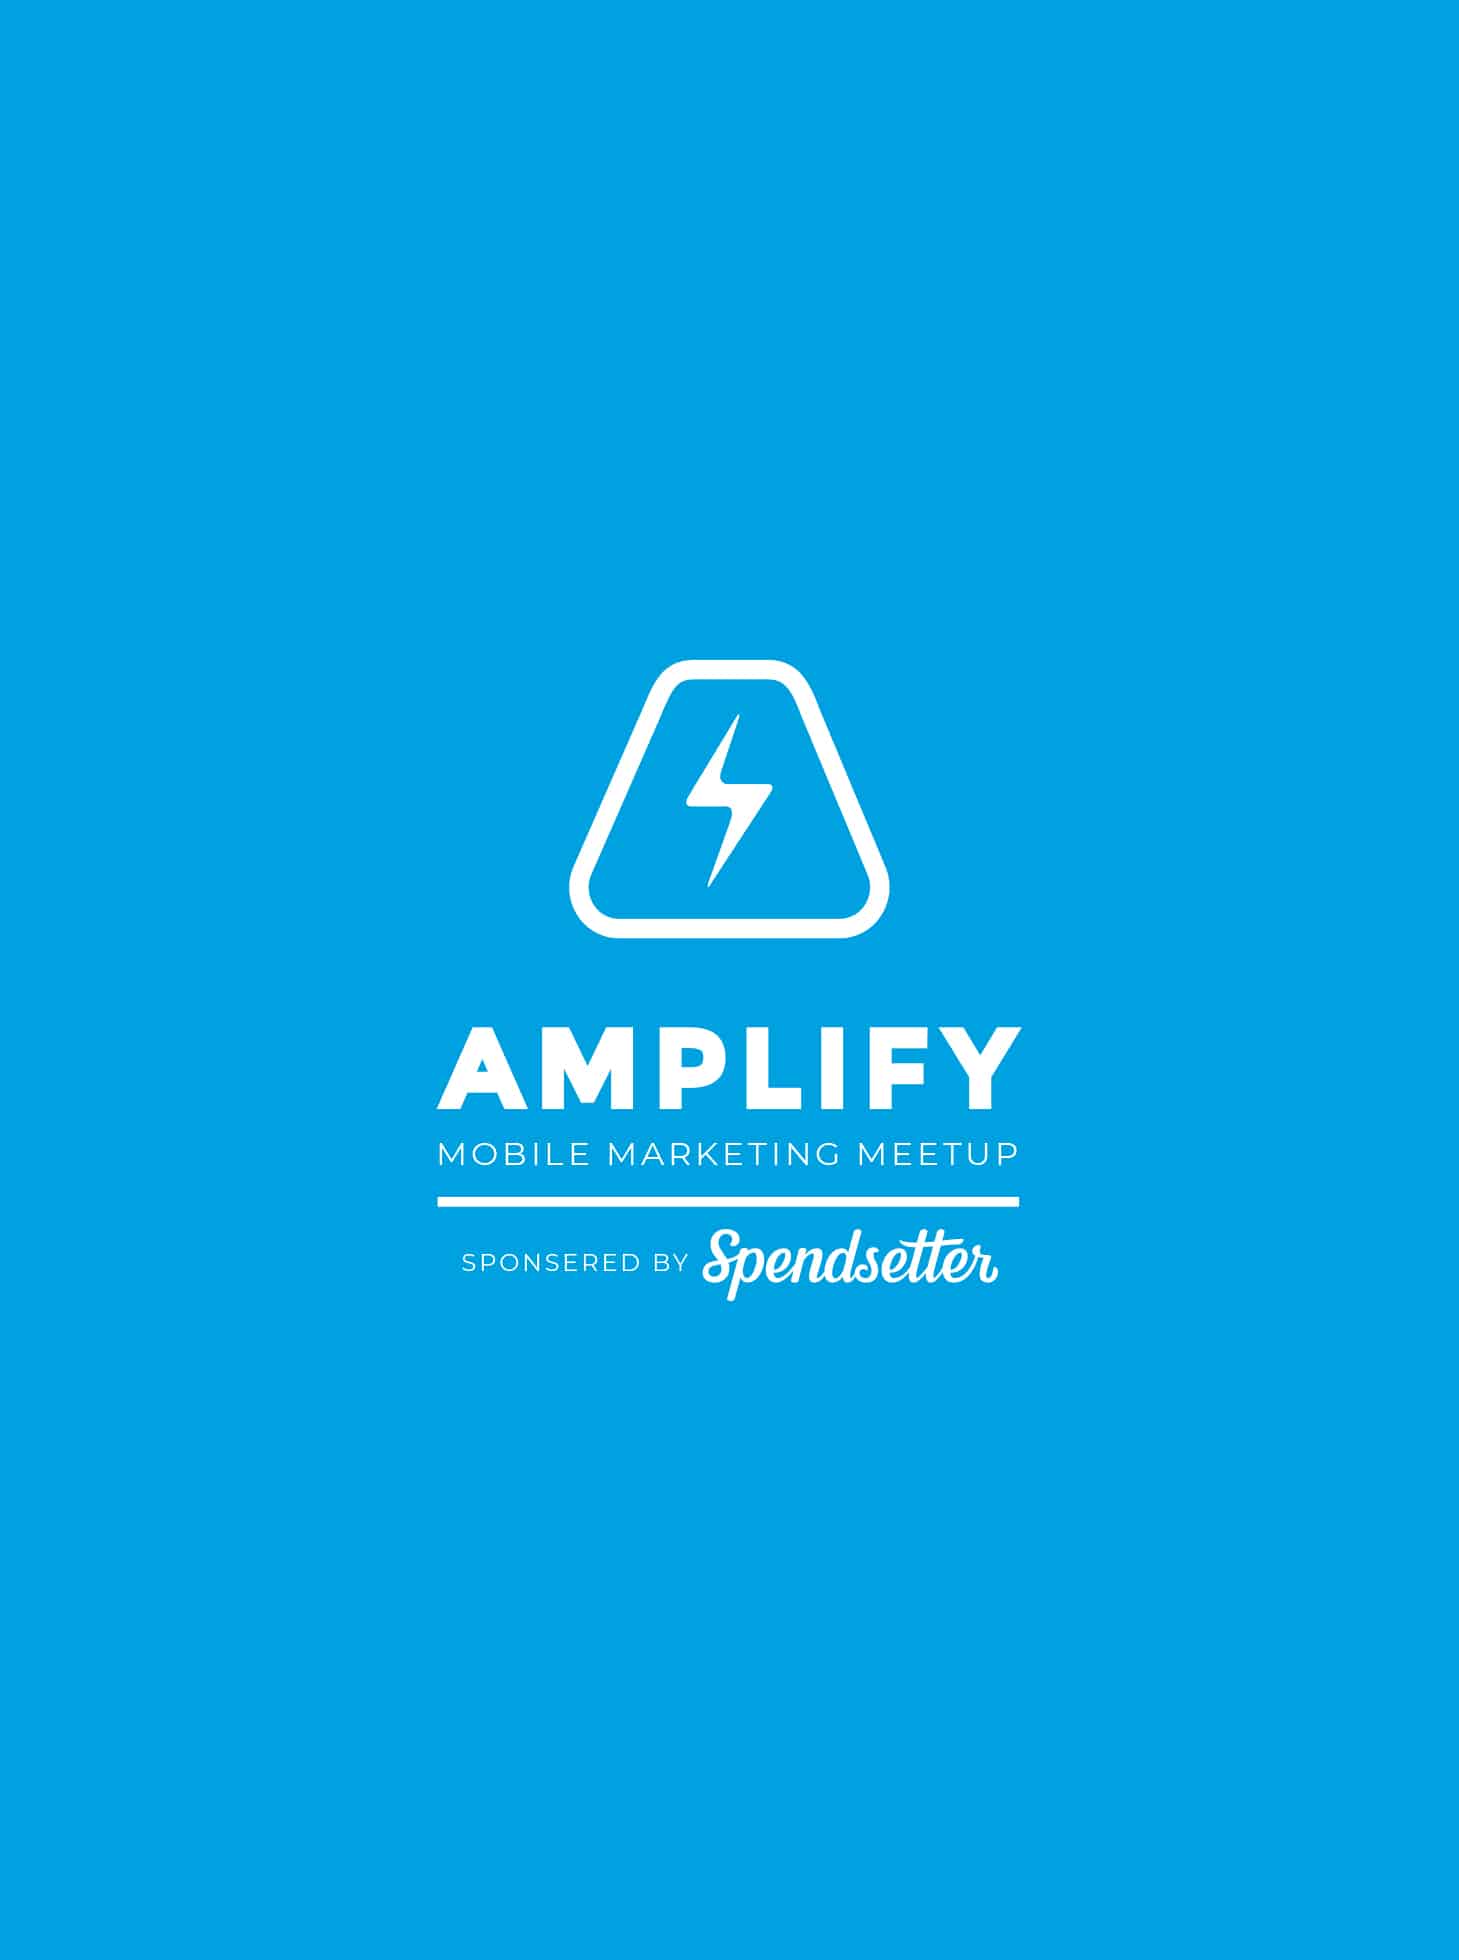 Amplify logo - Light blue